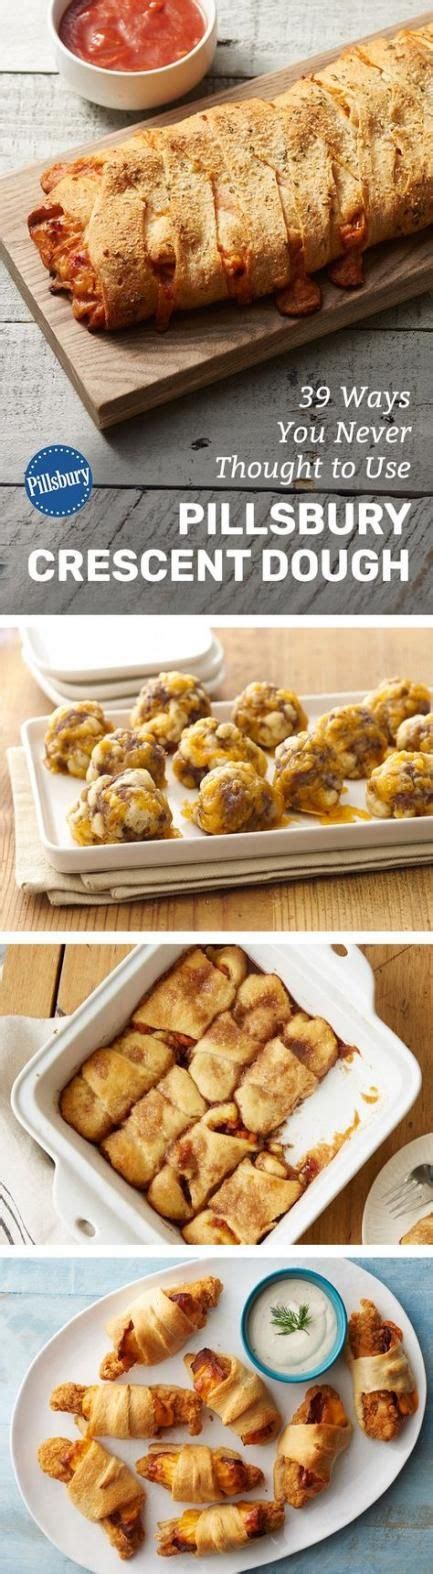 trendy breakfast casserole pillsbury crescent crescent recipes